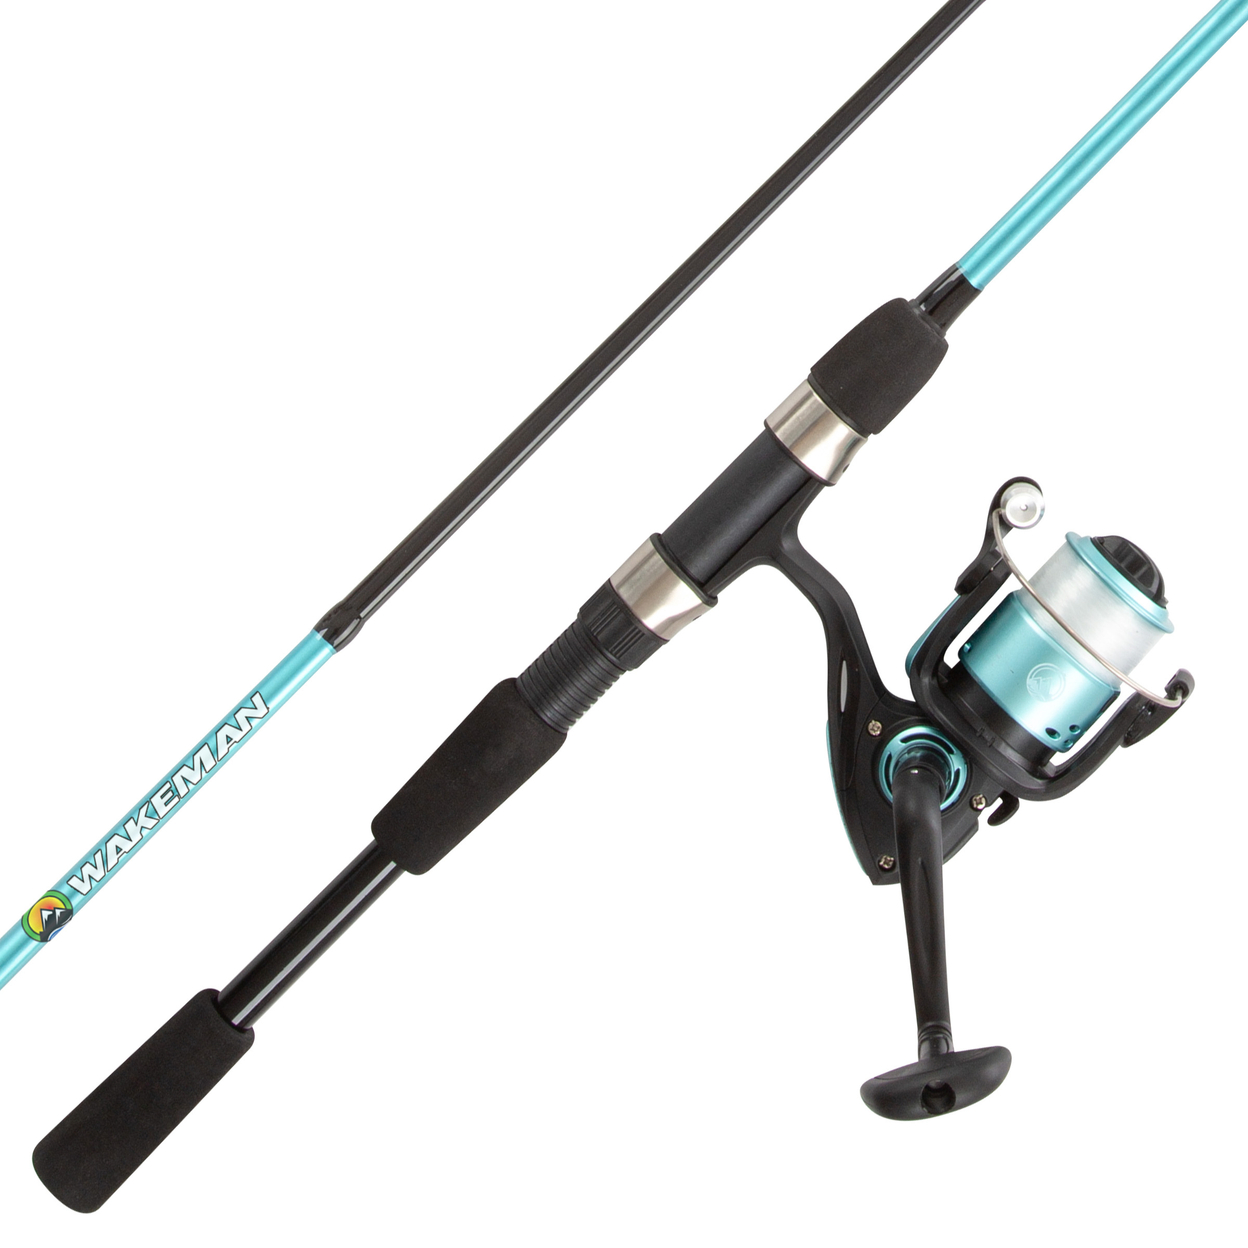 Beginner Open Face Spinning Rod And Reel 6 Ft Fiberglass Fishing Pole